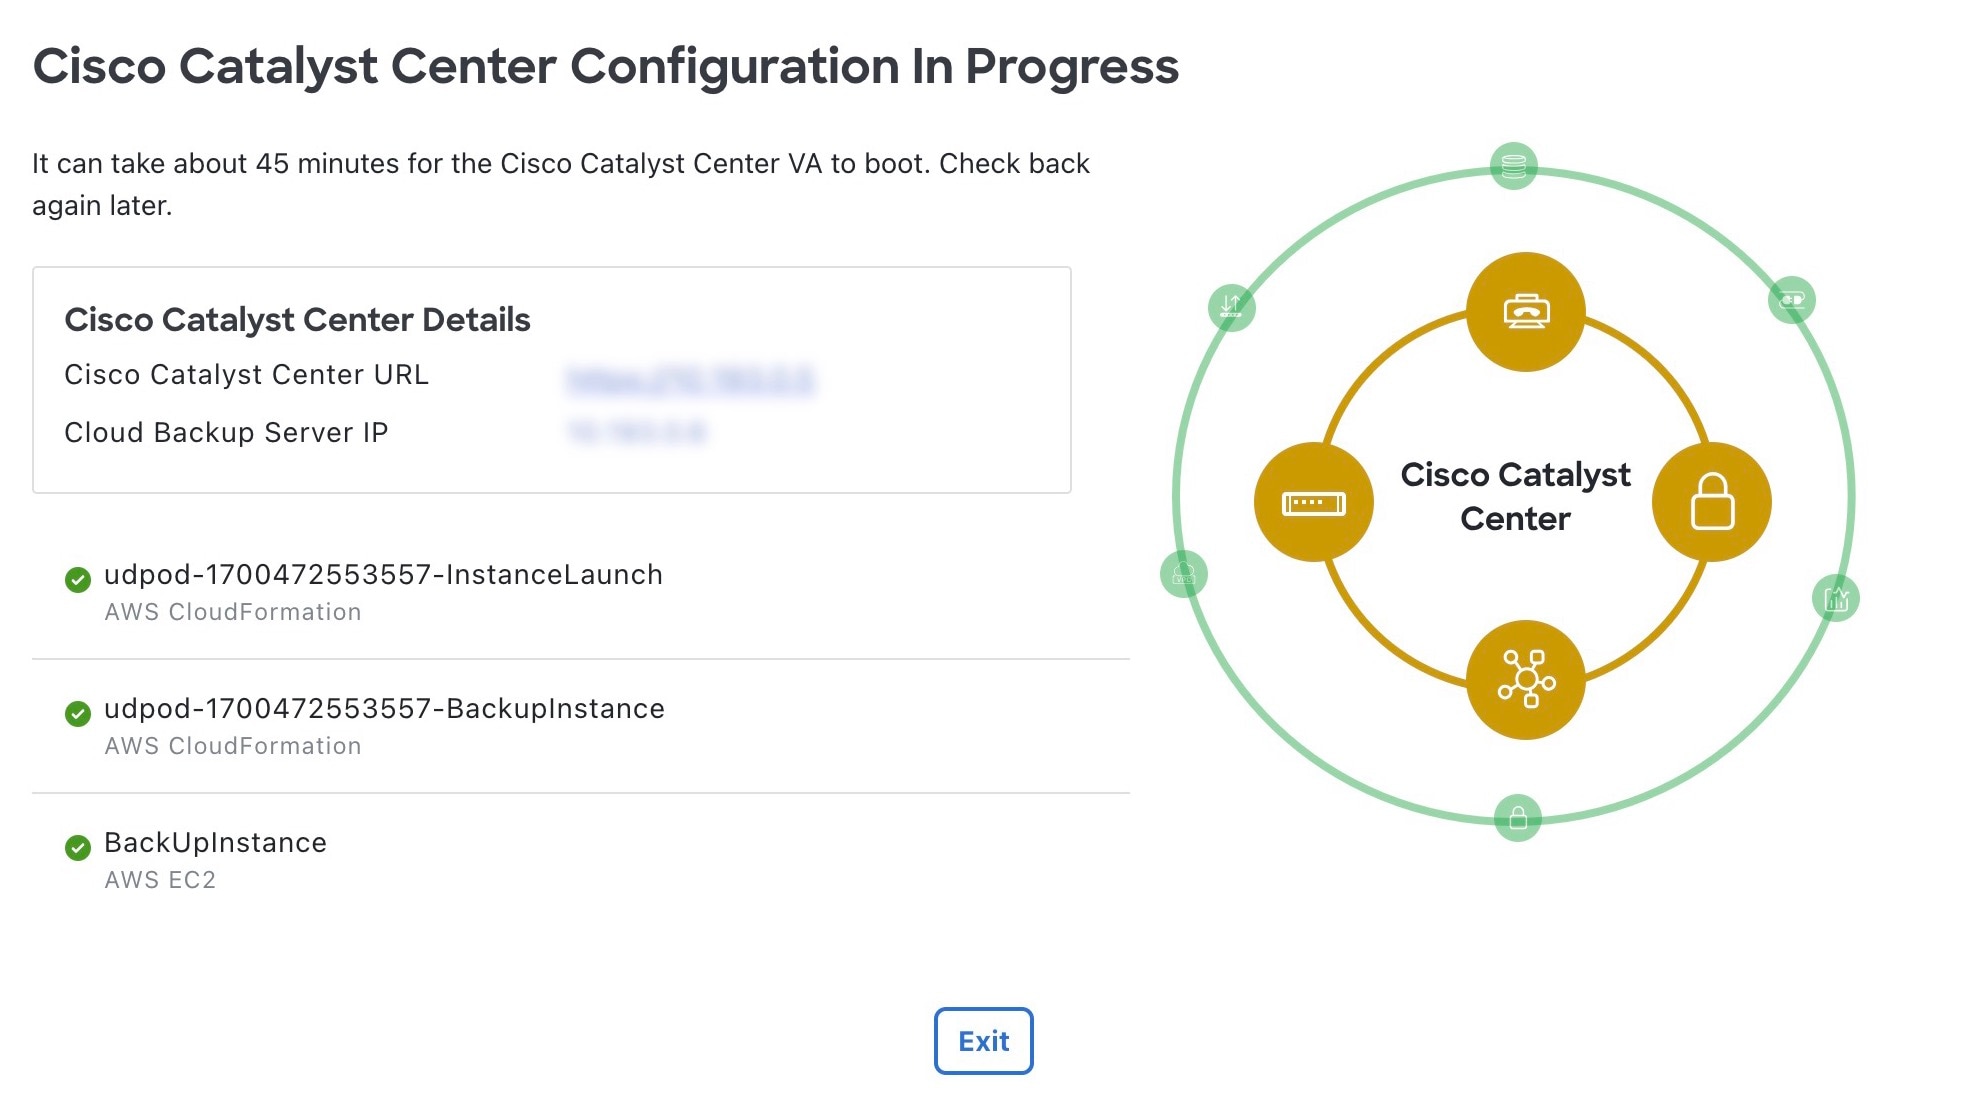 [Cisco Catalyst Center Configuration In Progress] ウィンドウに、Cisco DNA Center VA の詳細と、外側のリングが緑色で内側のリングがオレンジ色の図が表示されます。